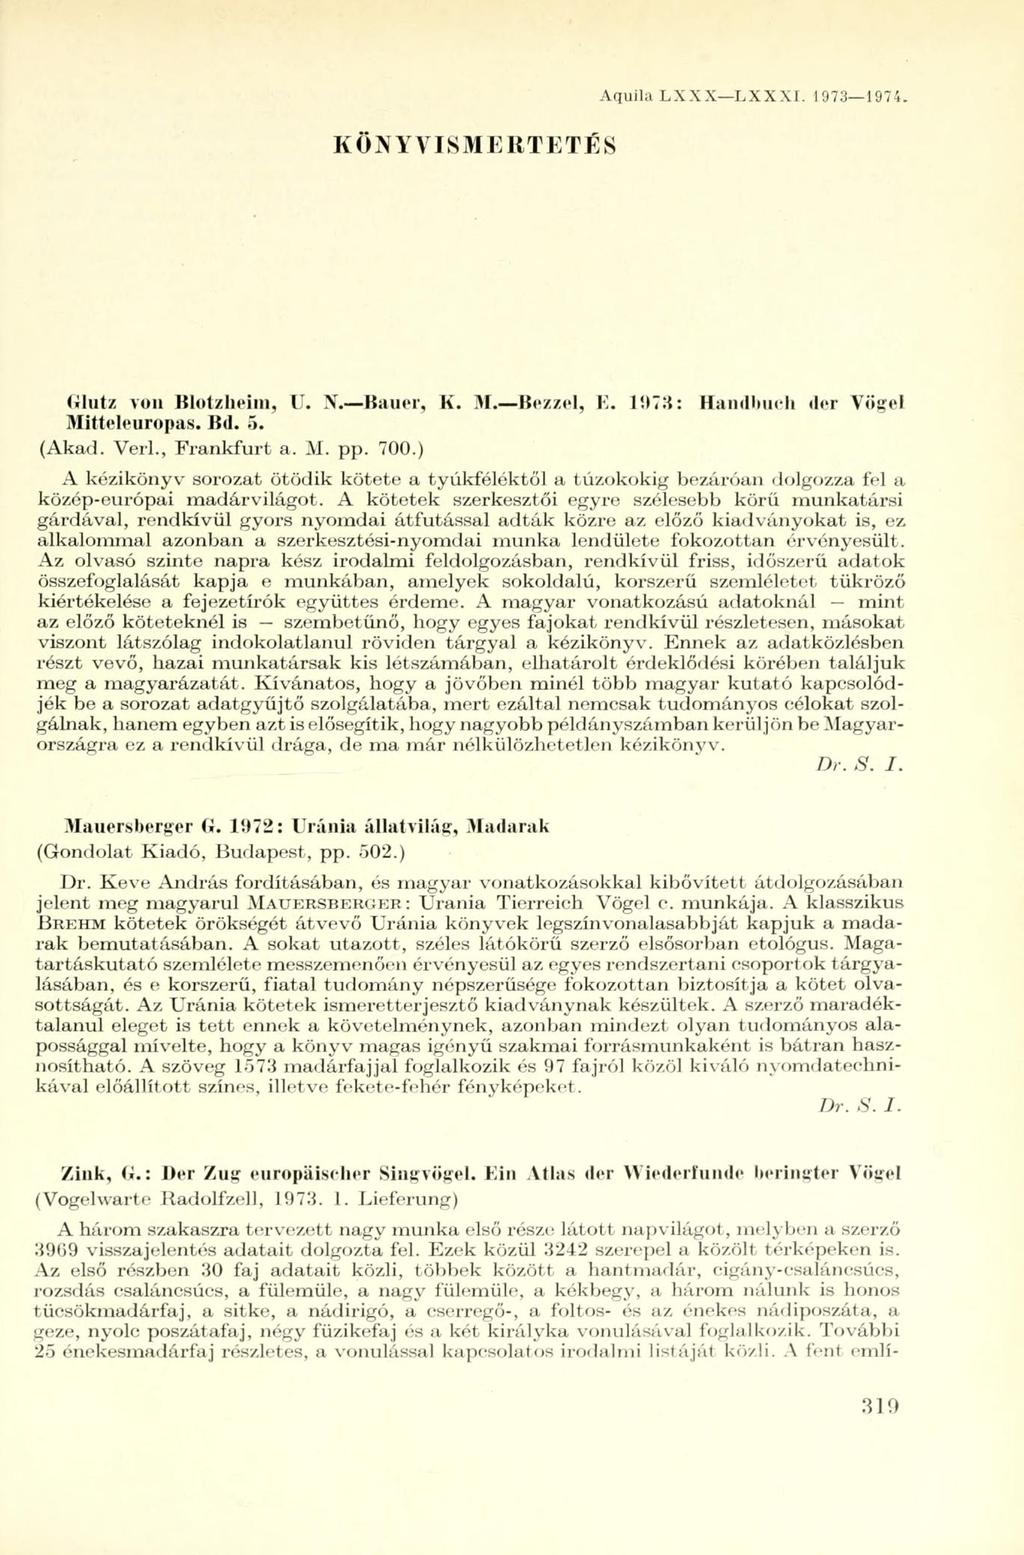 KÖNYVISMERTETÉS Aquila LXXX LXXX1. 1073 1974. (ílutz von Stotzheim, U. N. Bauer, K. M. Bezzel, E. 1973: Handbuch der Vögel Mitteleuropas. Bd. ő. (Akad. Verl., Frankfurt a. M. pp. 700.